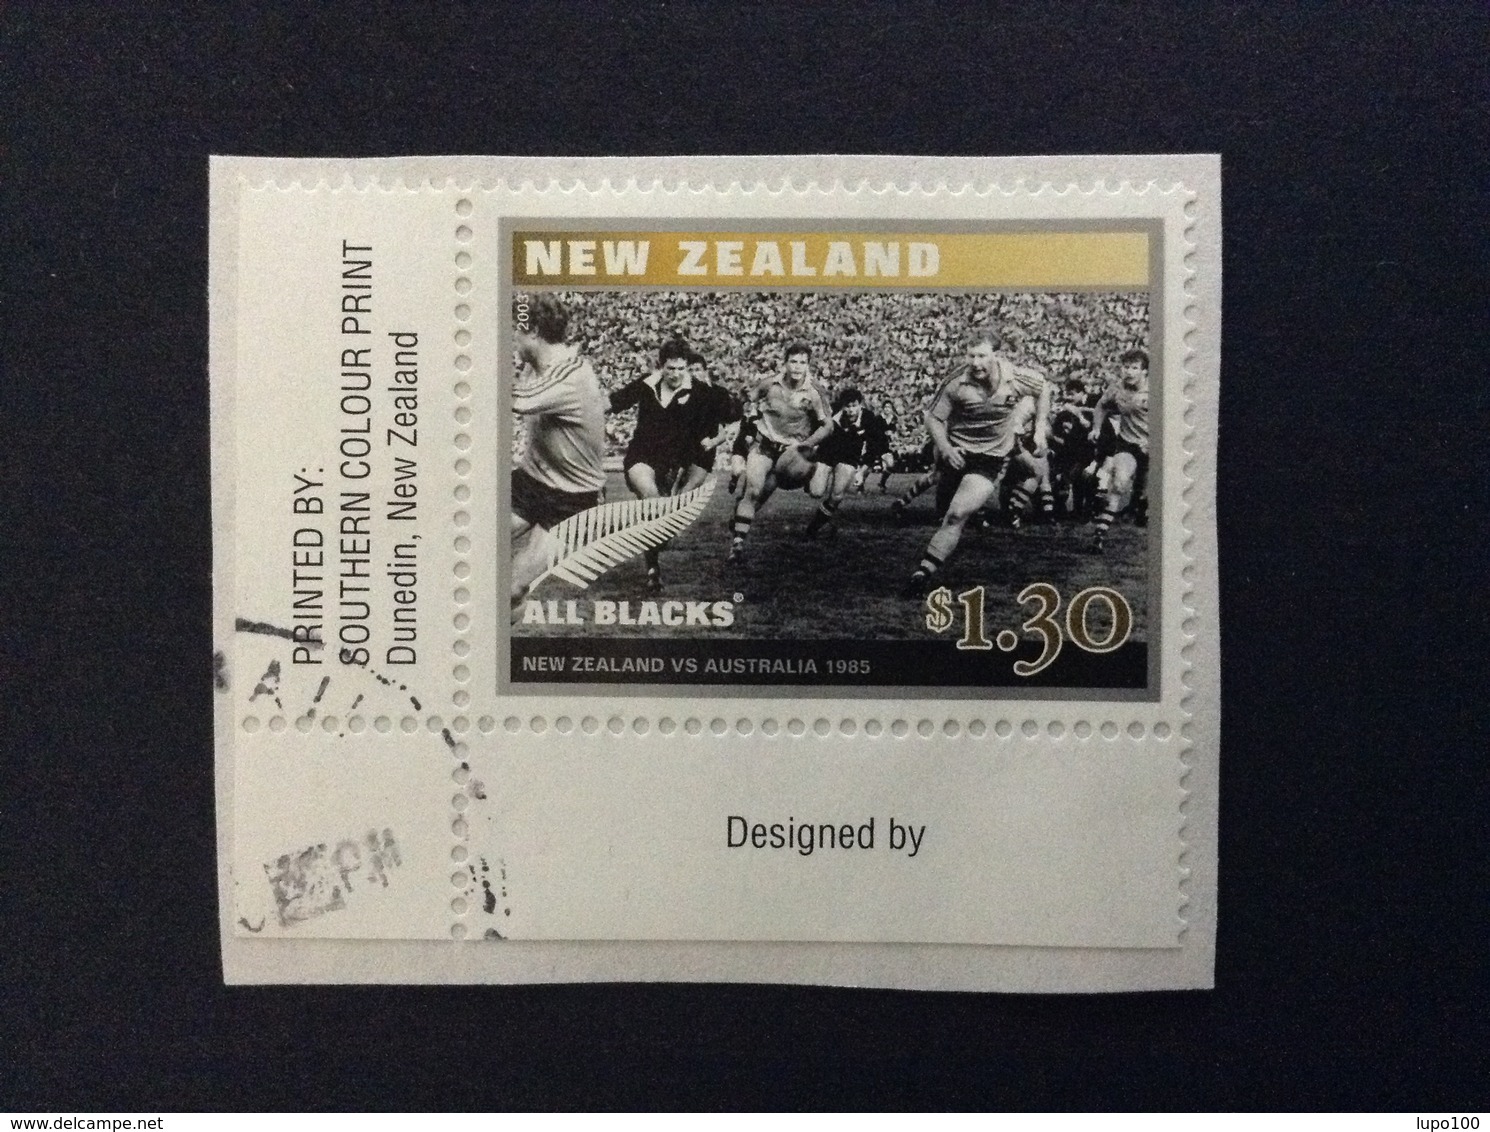 NEW ZEALAND 1985 RUGBY ALL BLACKS 1.30 $ FRANCOBOLLO USATO STAMP USED - Usati